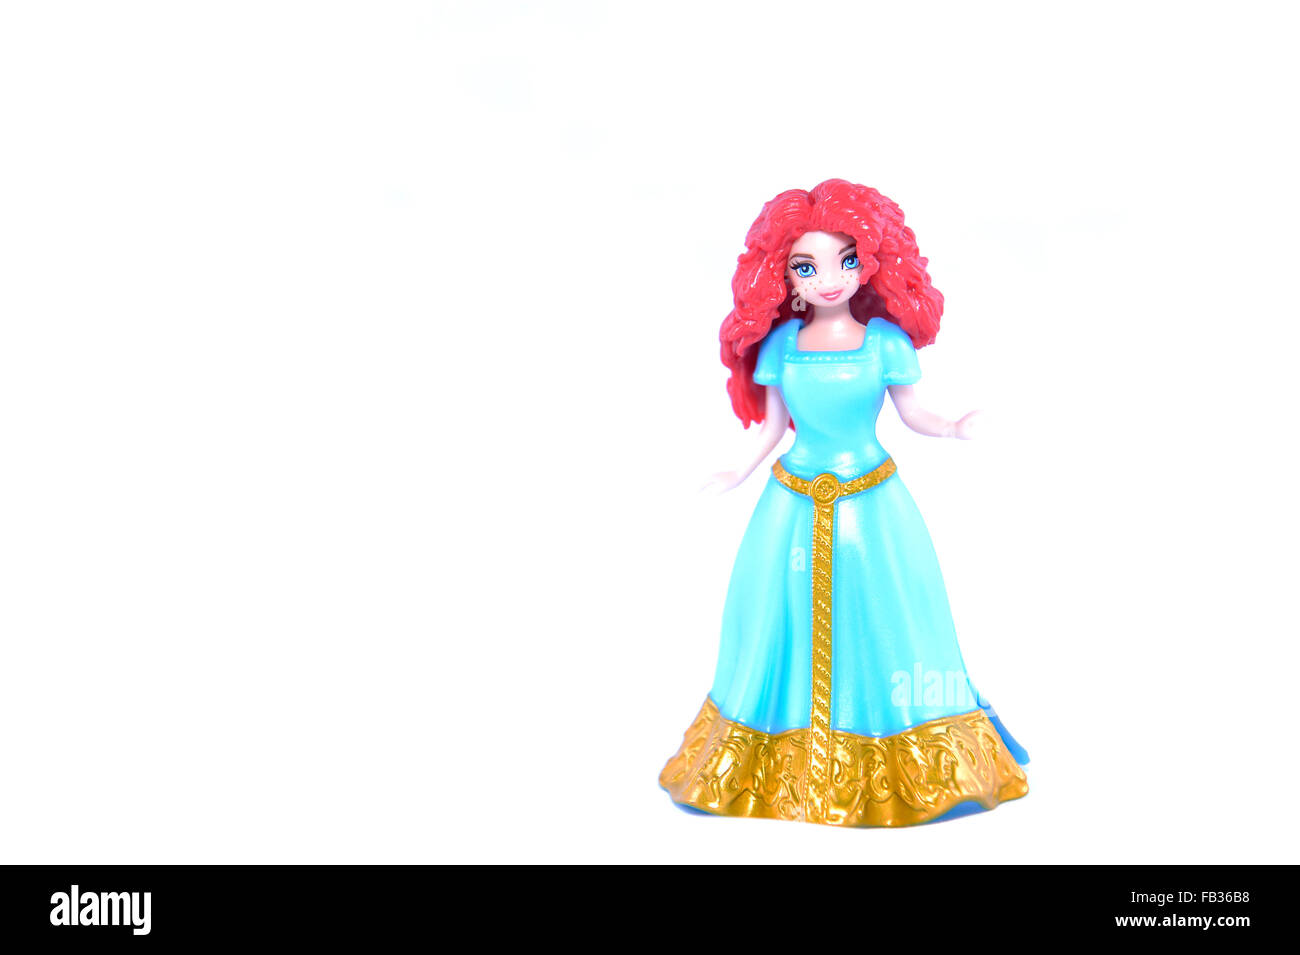 Disney Princess Magiclip Merida Toy Doll Stock Photo